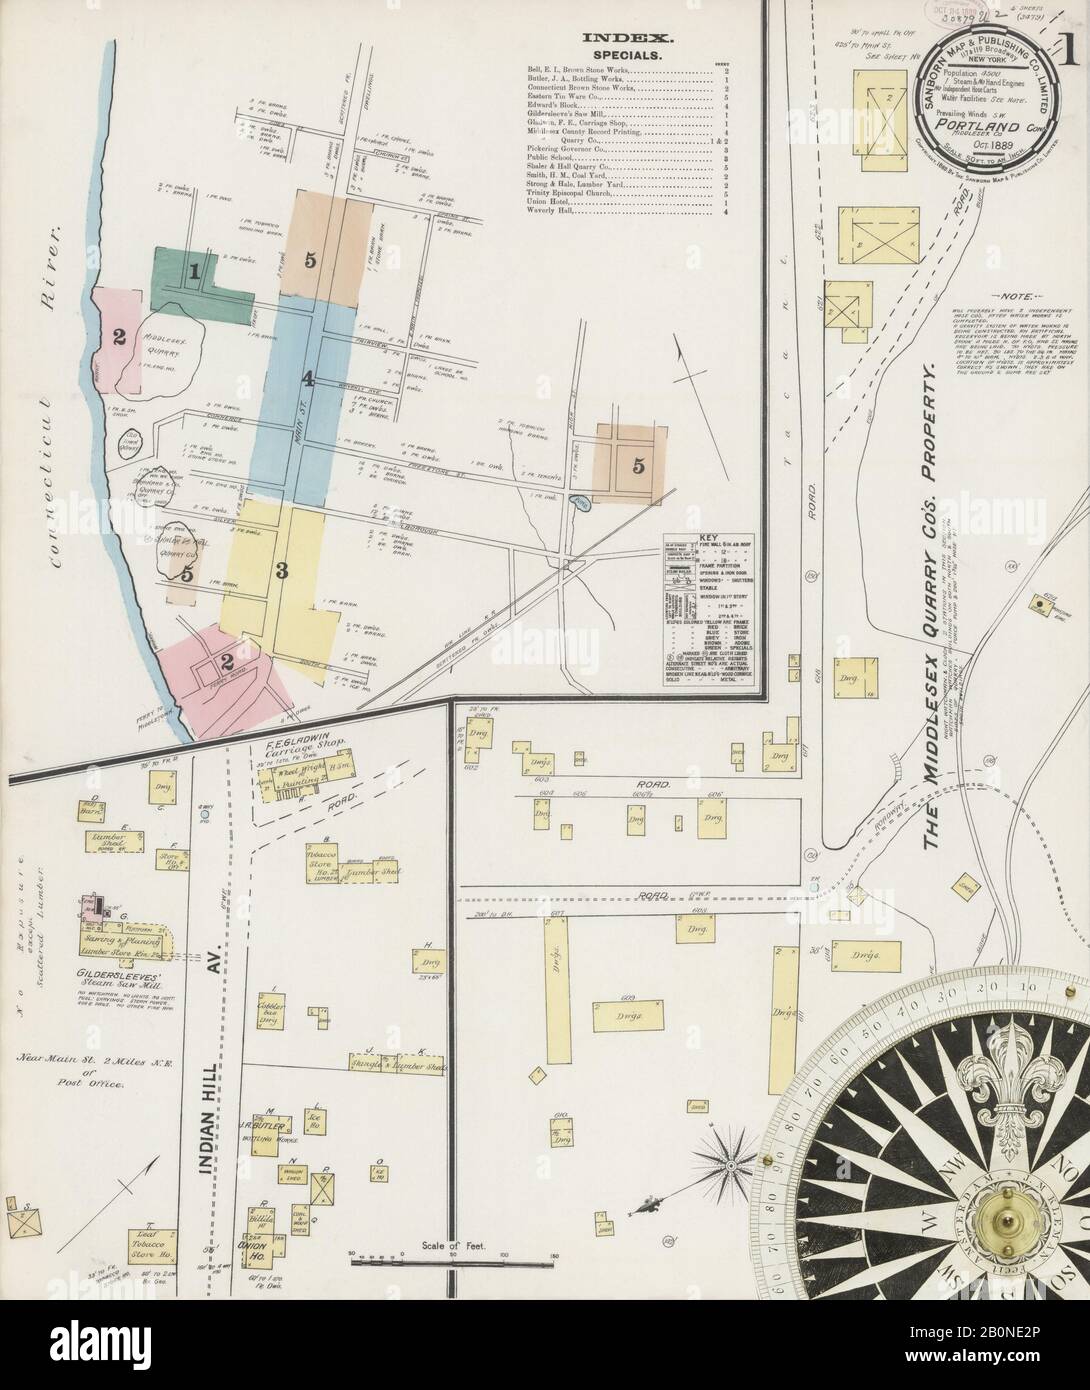 Imagen 1 De Sanborn Fire Insurance Map De Portland, Condado De Middlesex, Connecticut. Octubre De 1889. 5 Hoja(s), América, mapa de calles con una brújula del siglo Xix Foto de stock